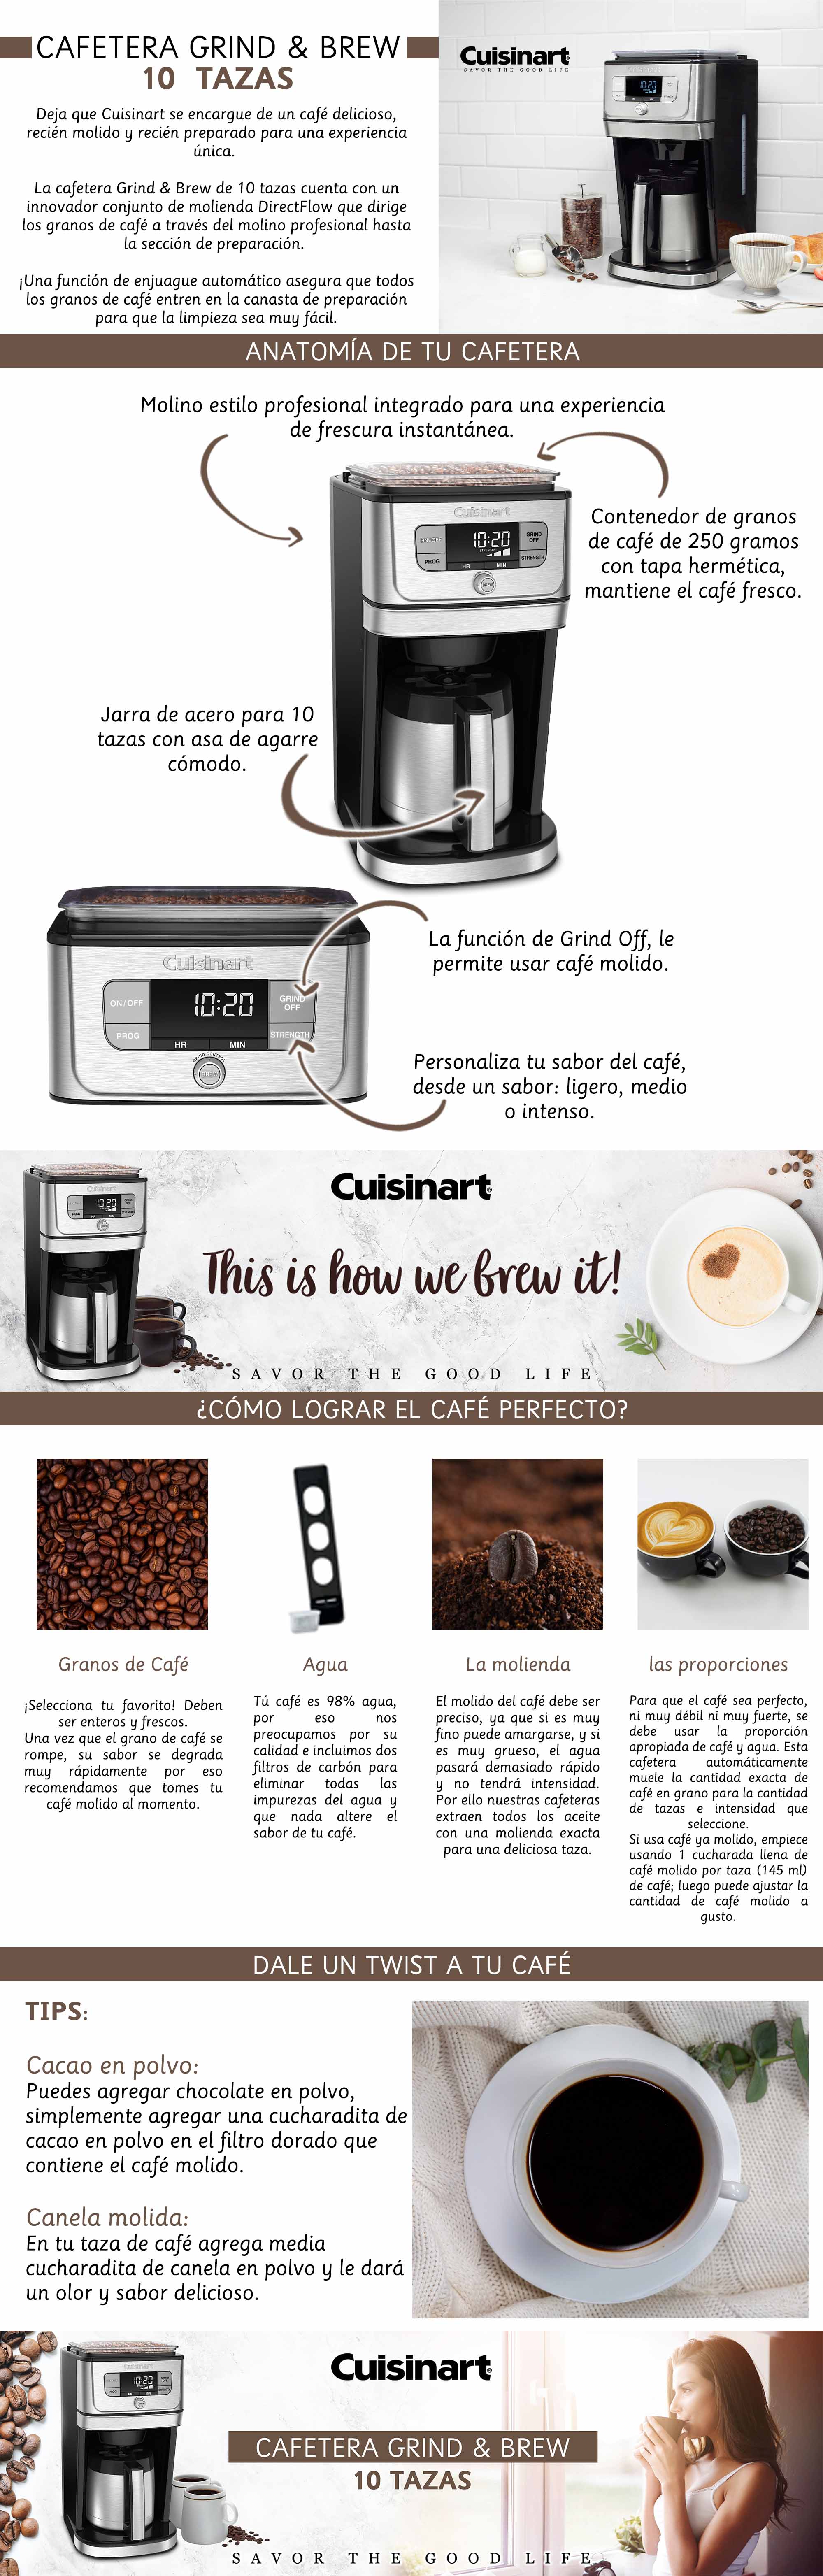 https://www.costco.com.mx/mediapermalink/674372-infografia-Cafeteragrind